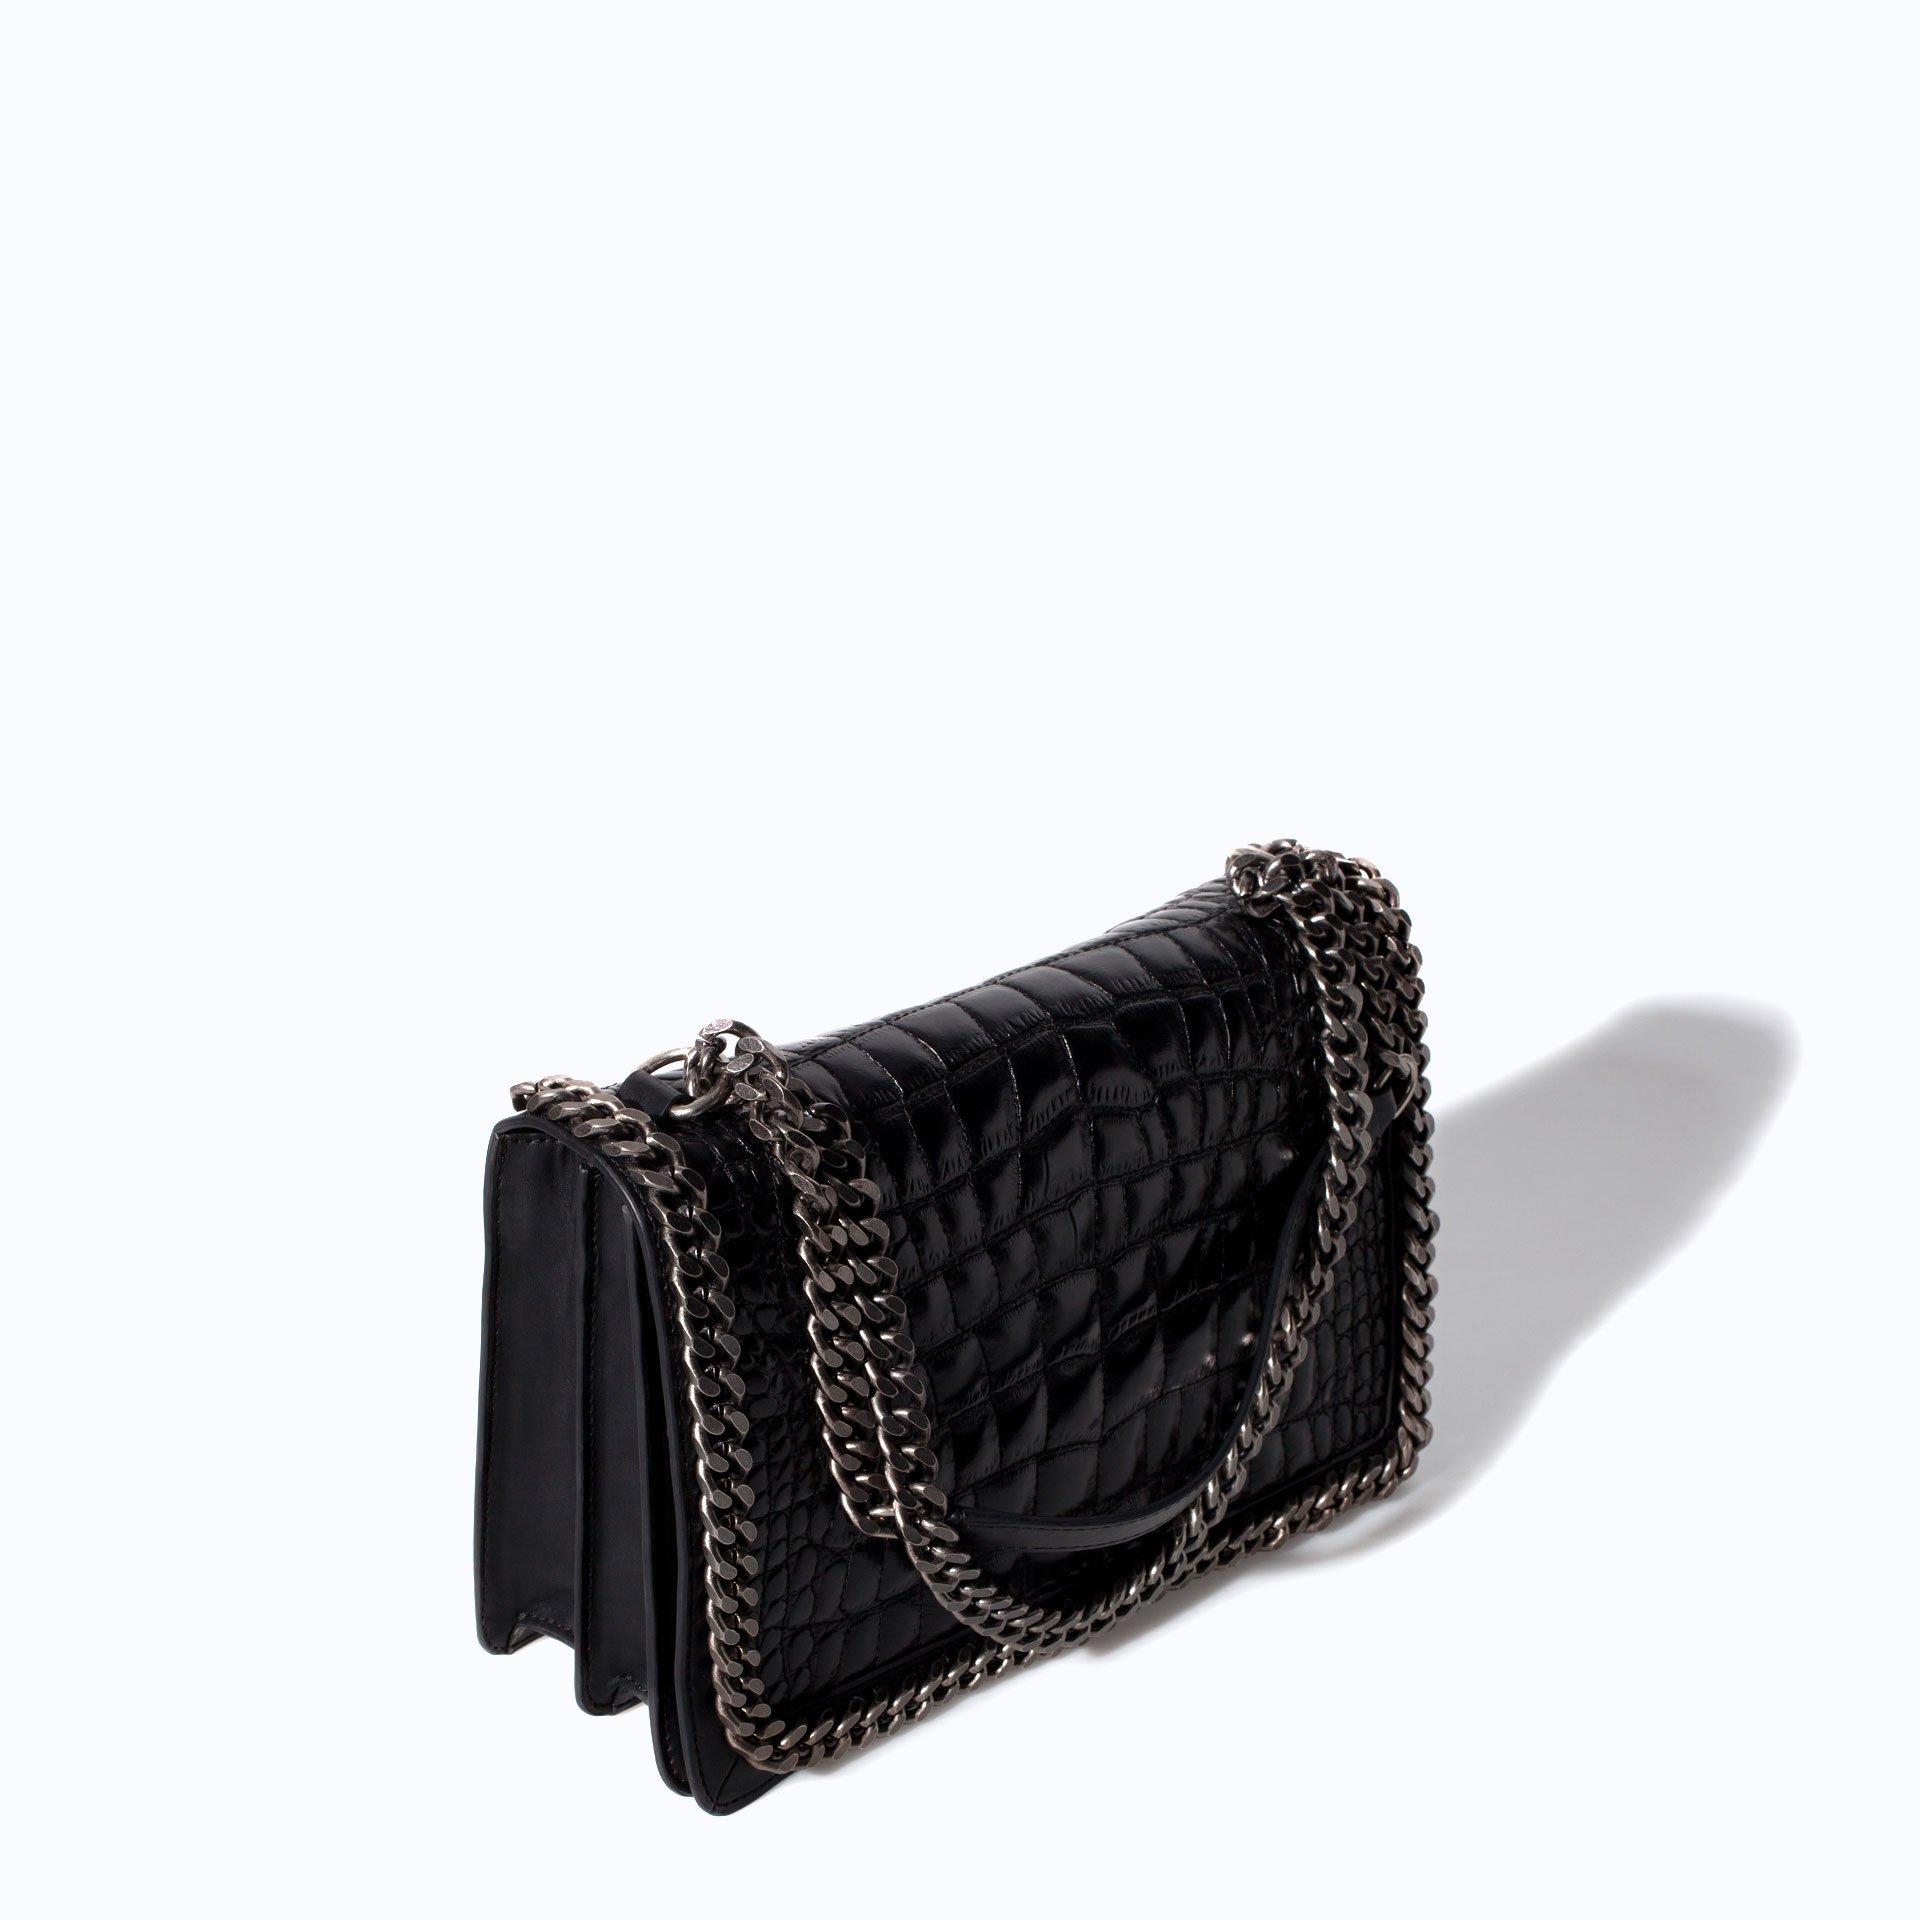 Zara Croc-Embossed Leather Shoulder Bag in Black | Lyst